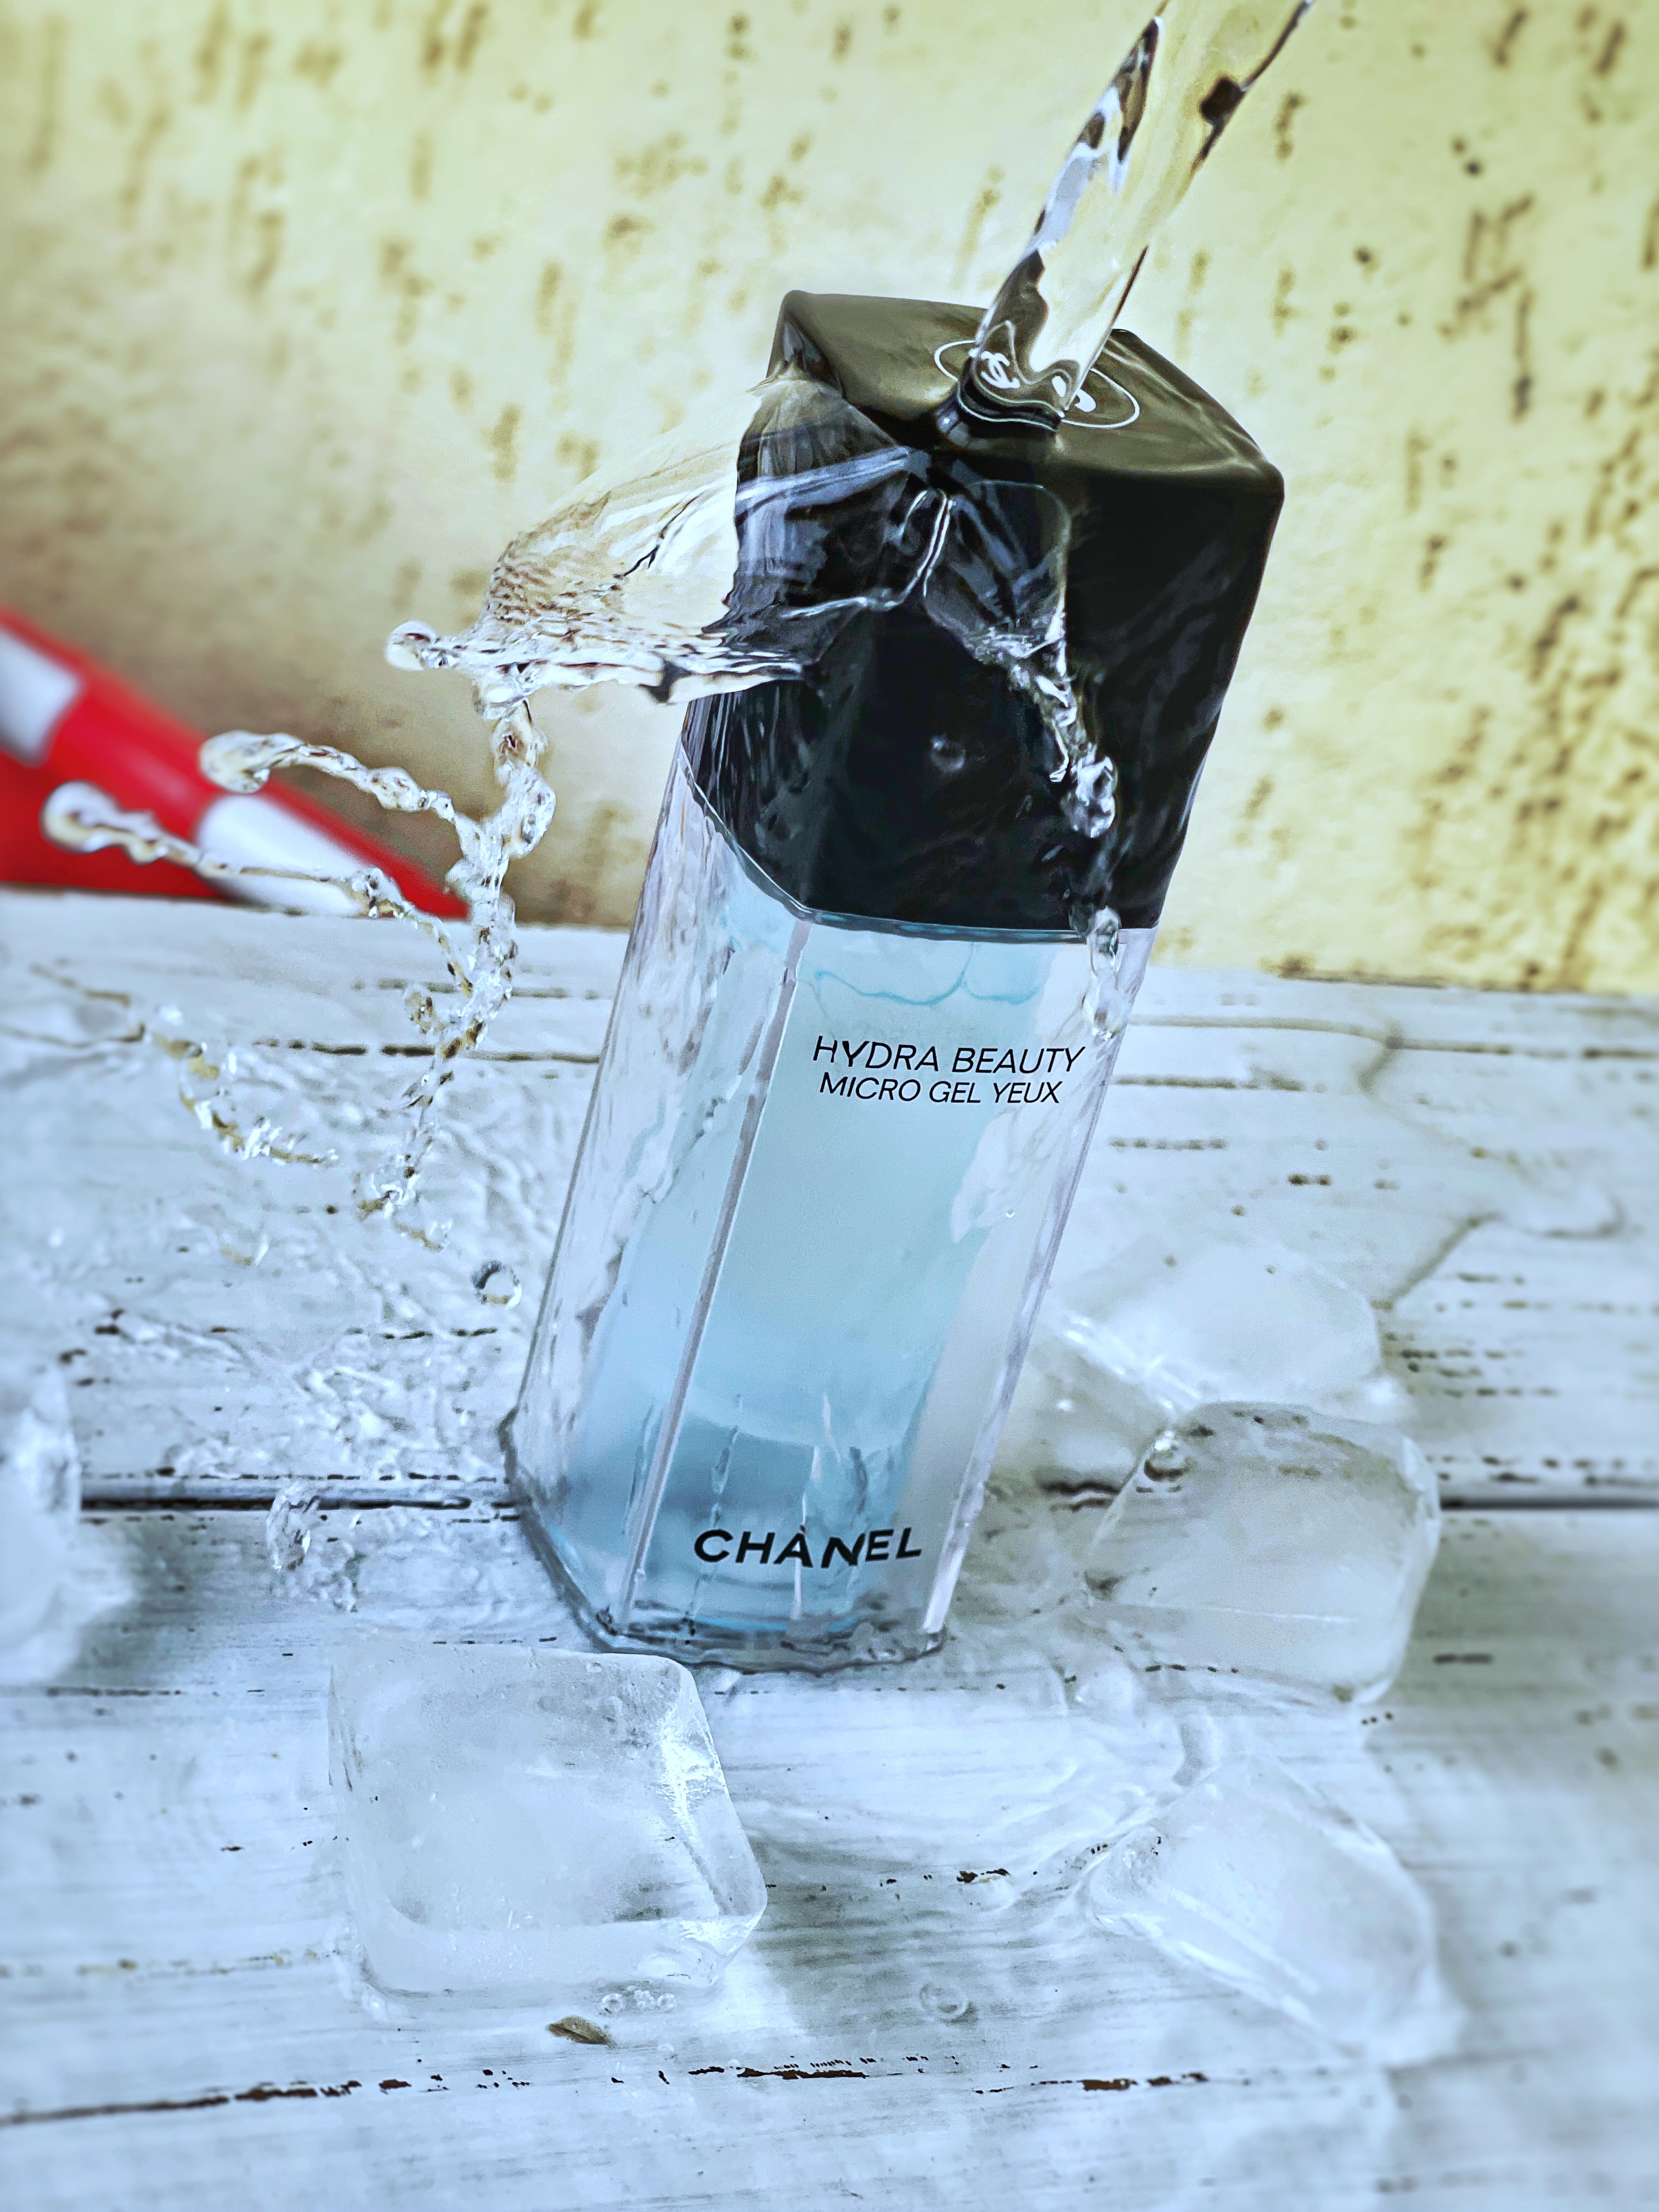 Chanel Hydra Beauty Micro Gel Yeux - Увлажняющий гель для кожи